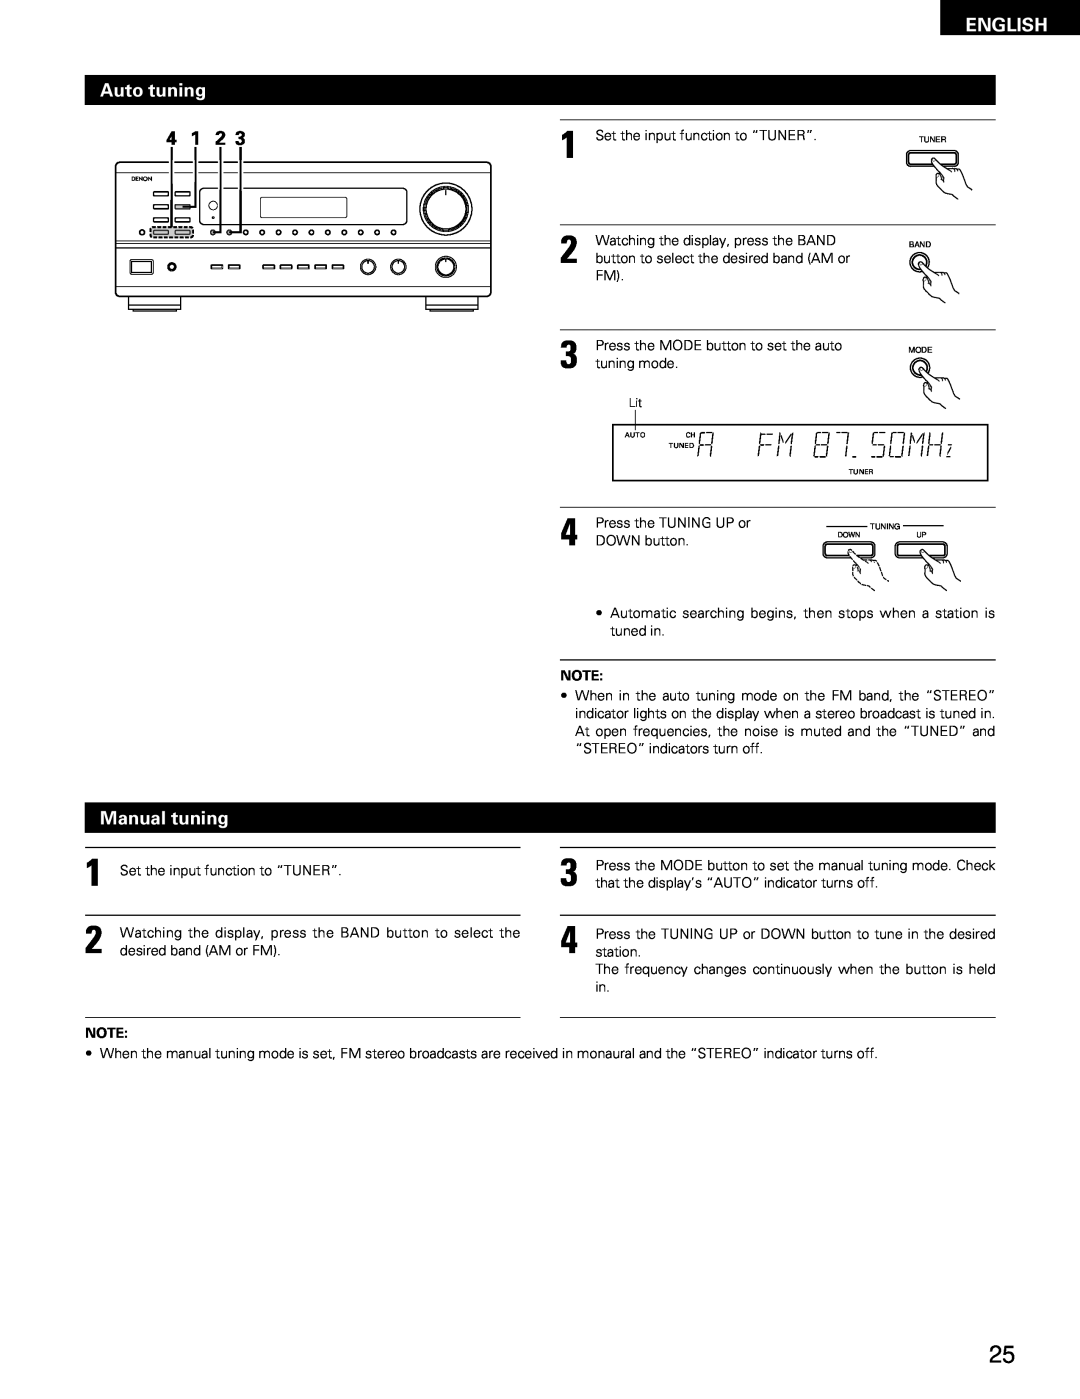 Denon DRA-685 manual Auto tuning, Manual tuning, English 